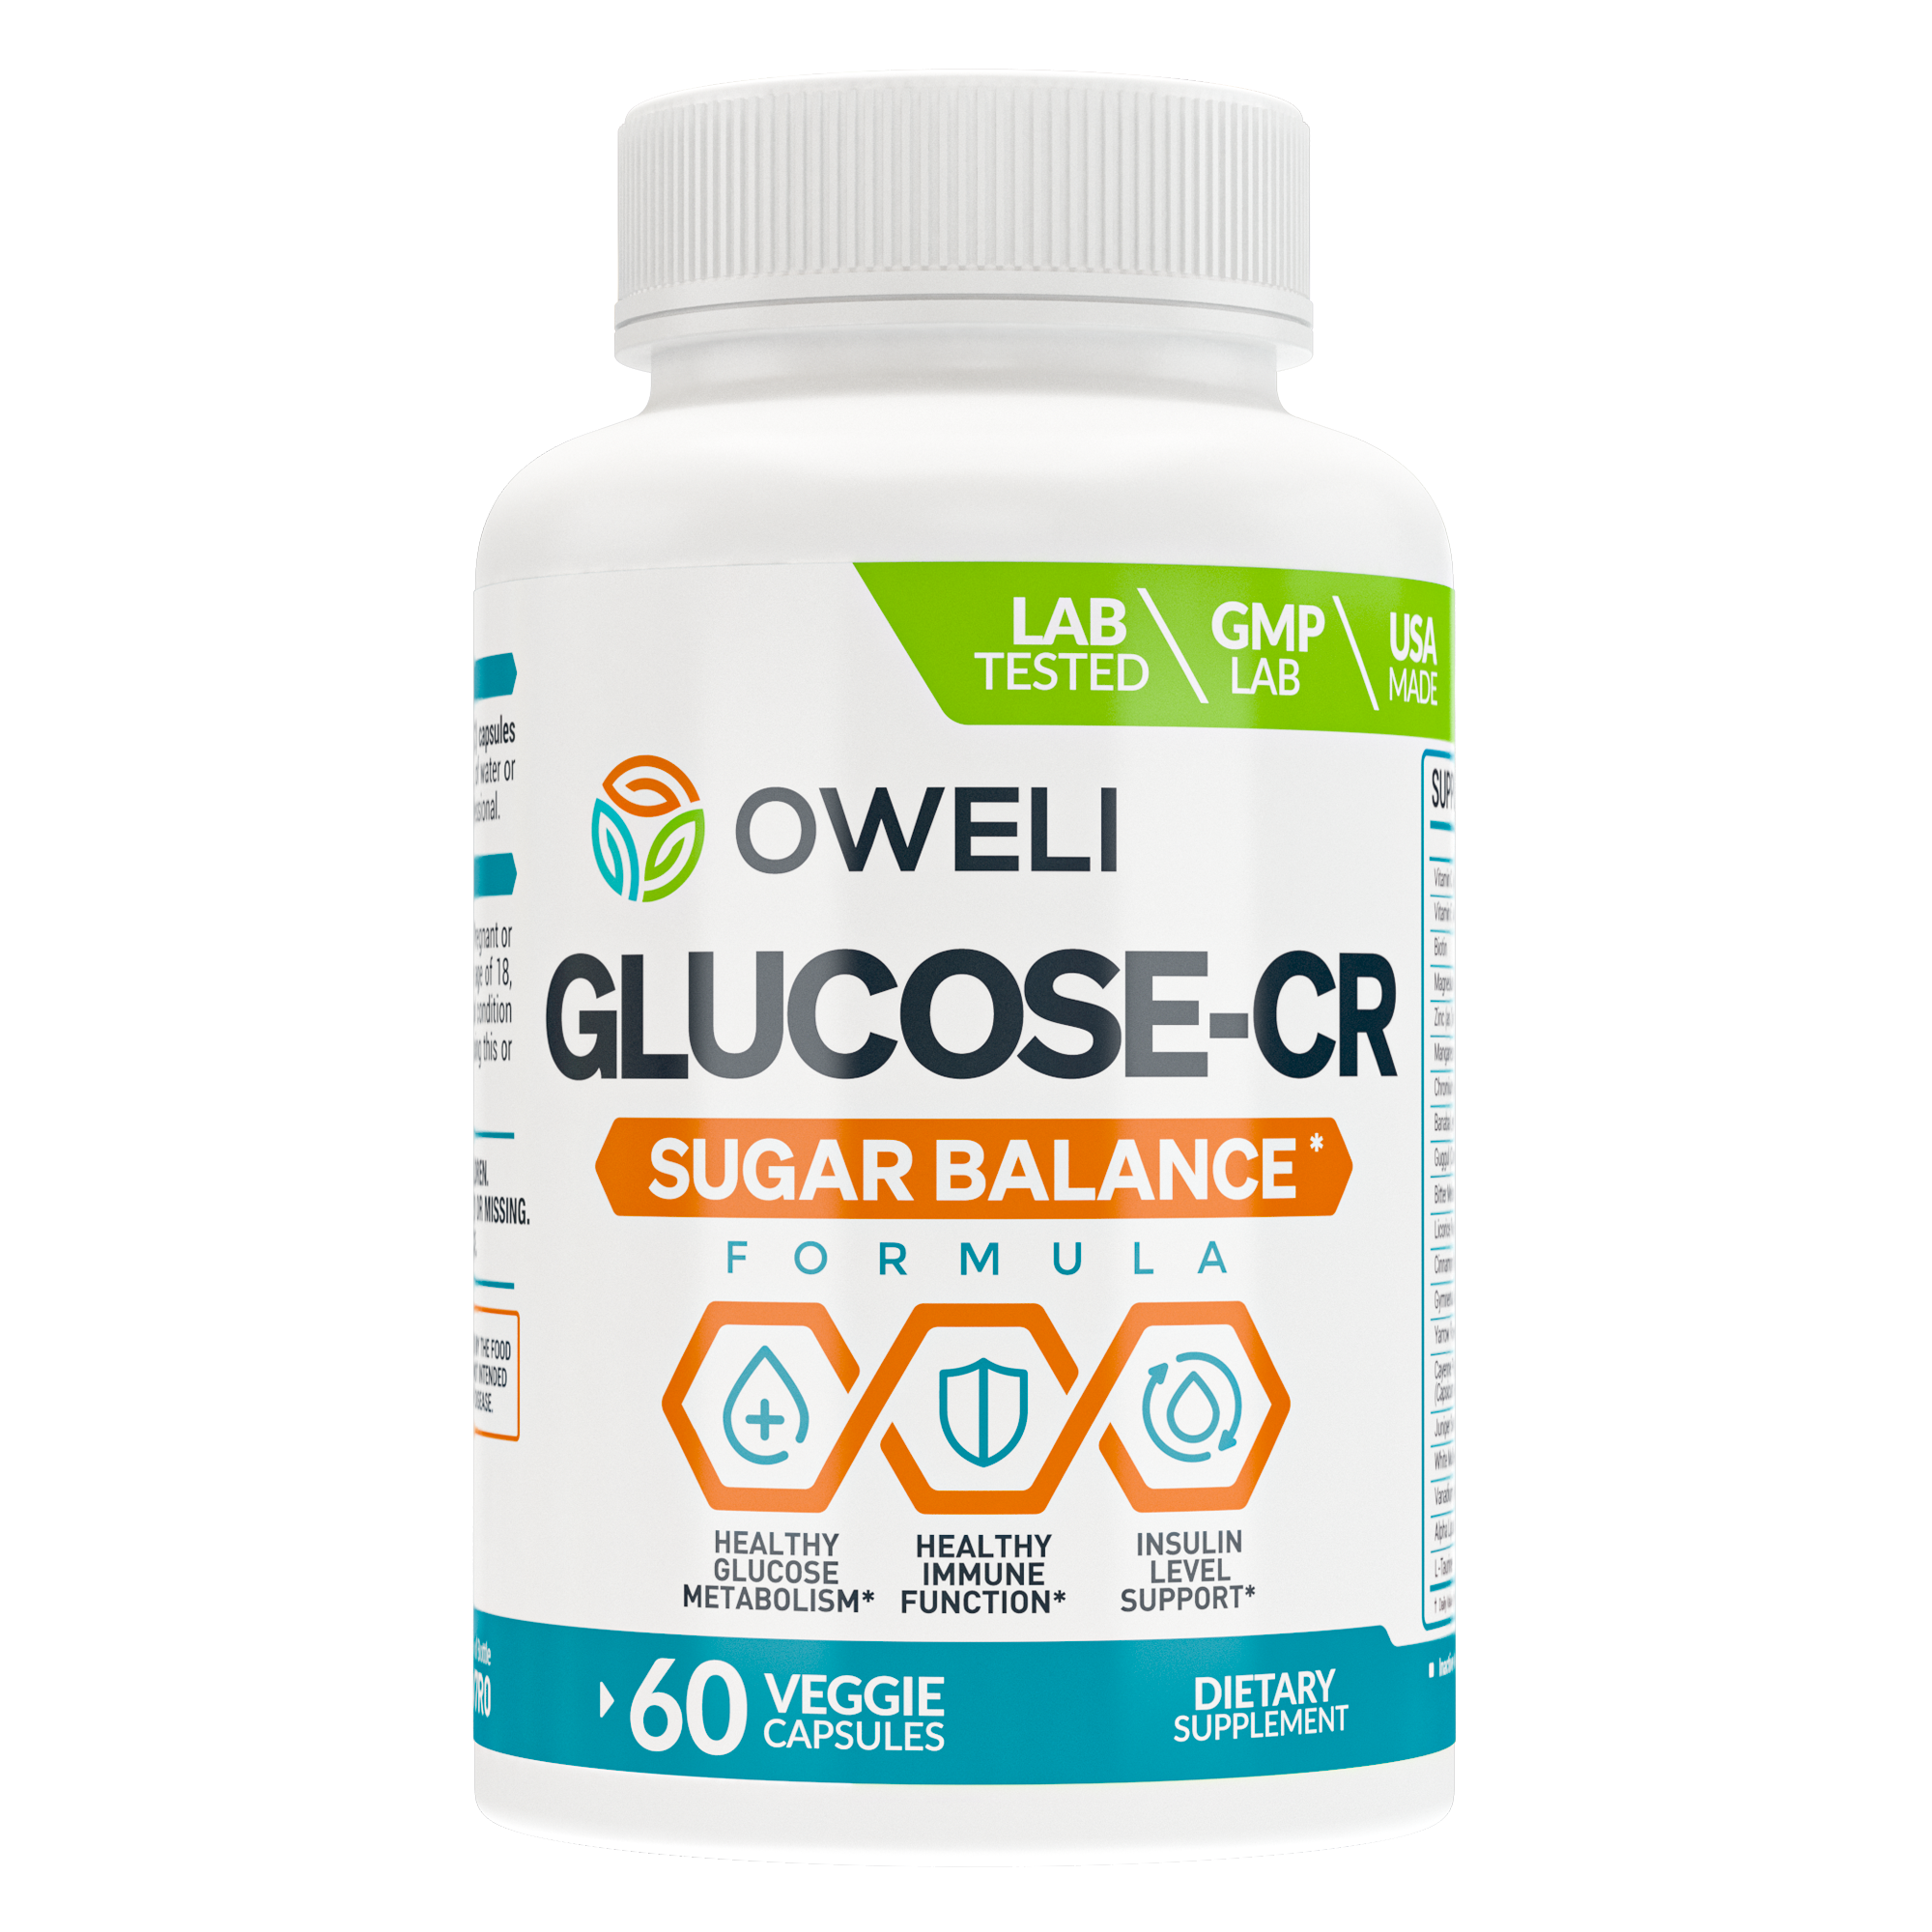 Oweli Glucose-CR